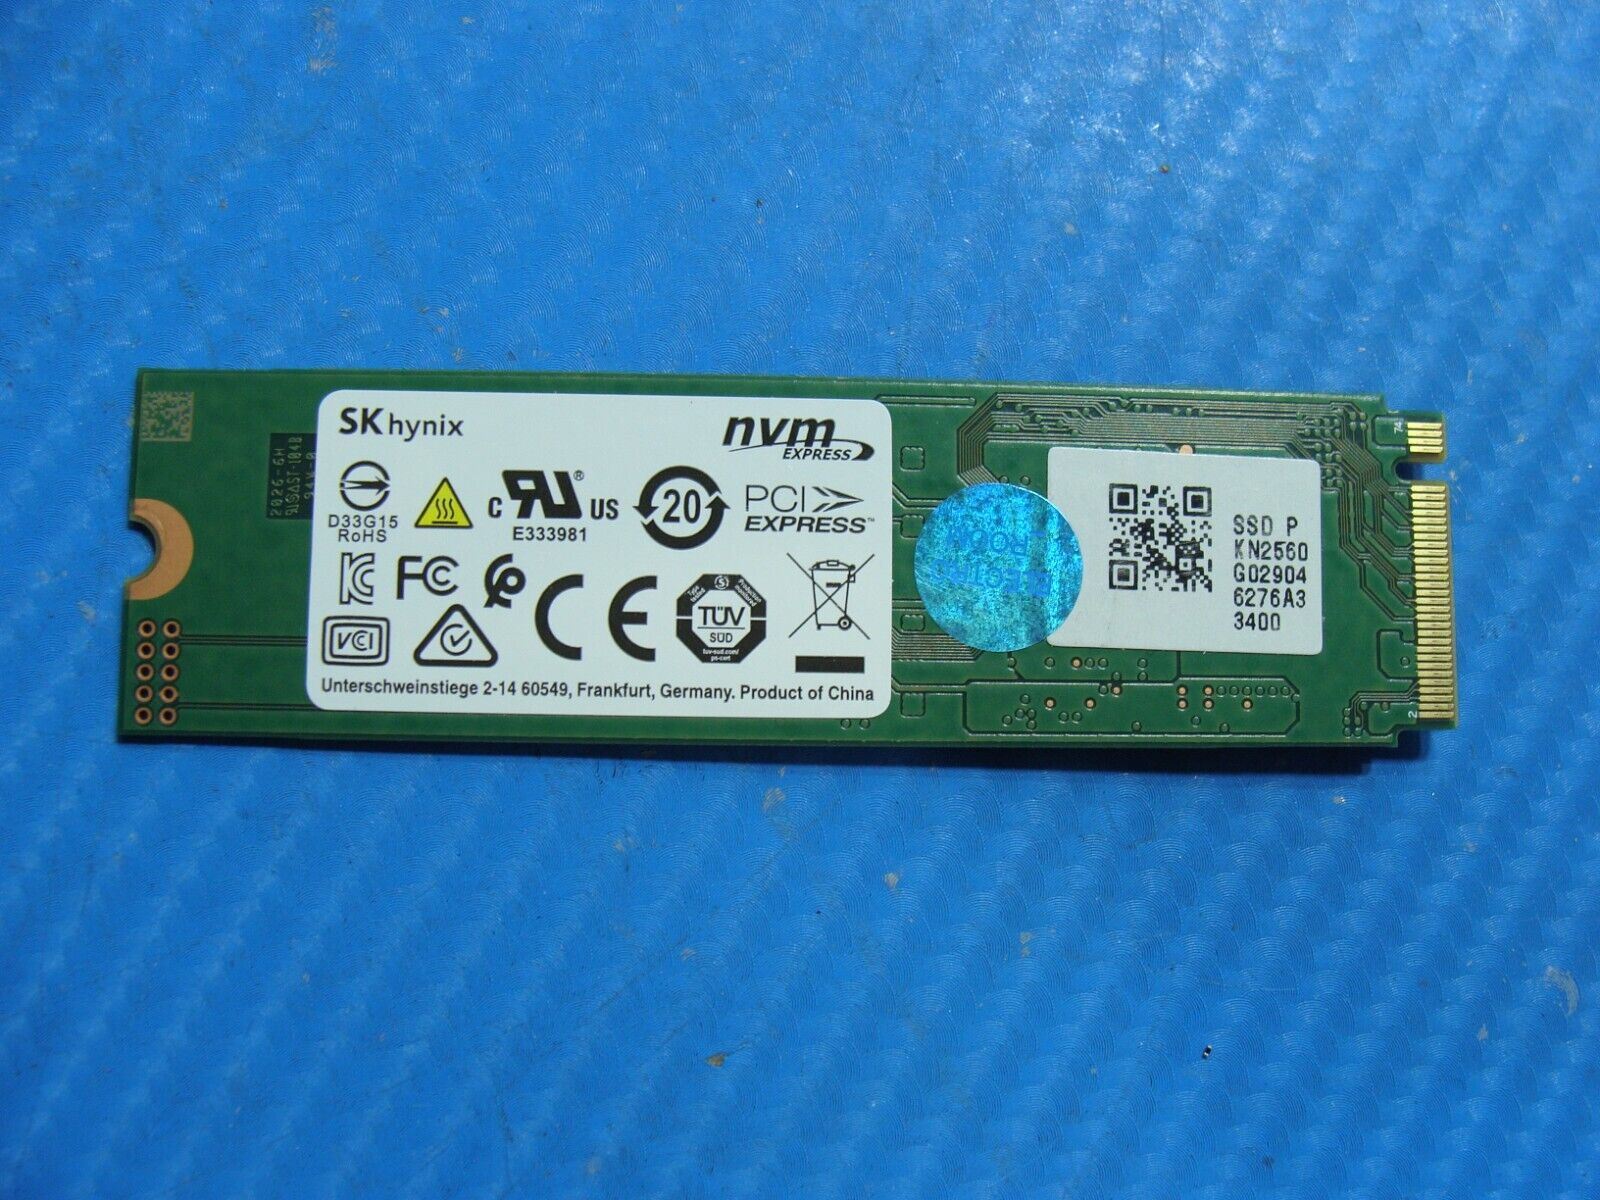 Acer A515-56 SK hynix 256GB NVMe M.2 SSD Solid State Drive HFM256GDJTNI-82A0A